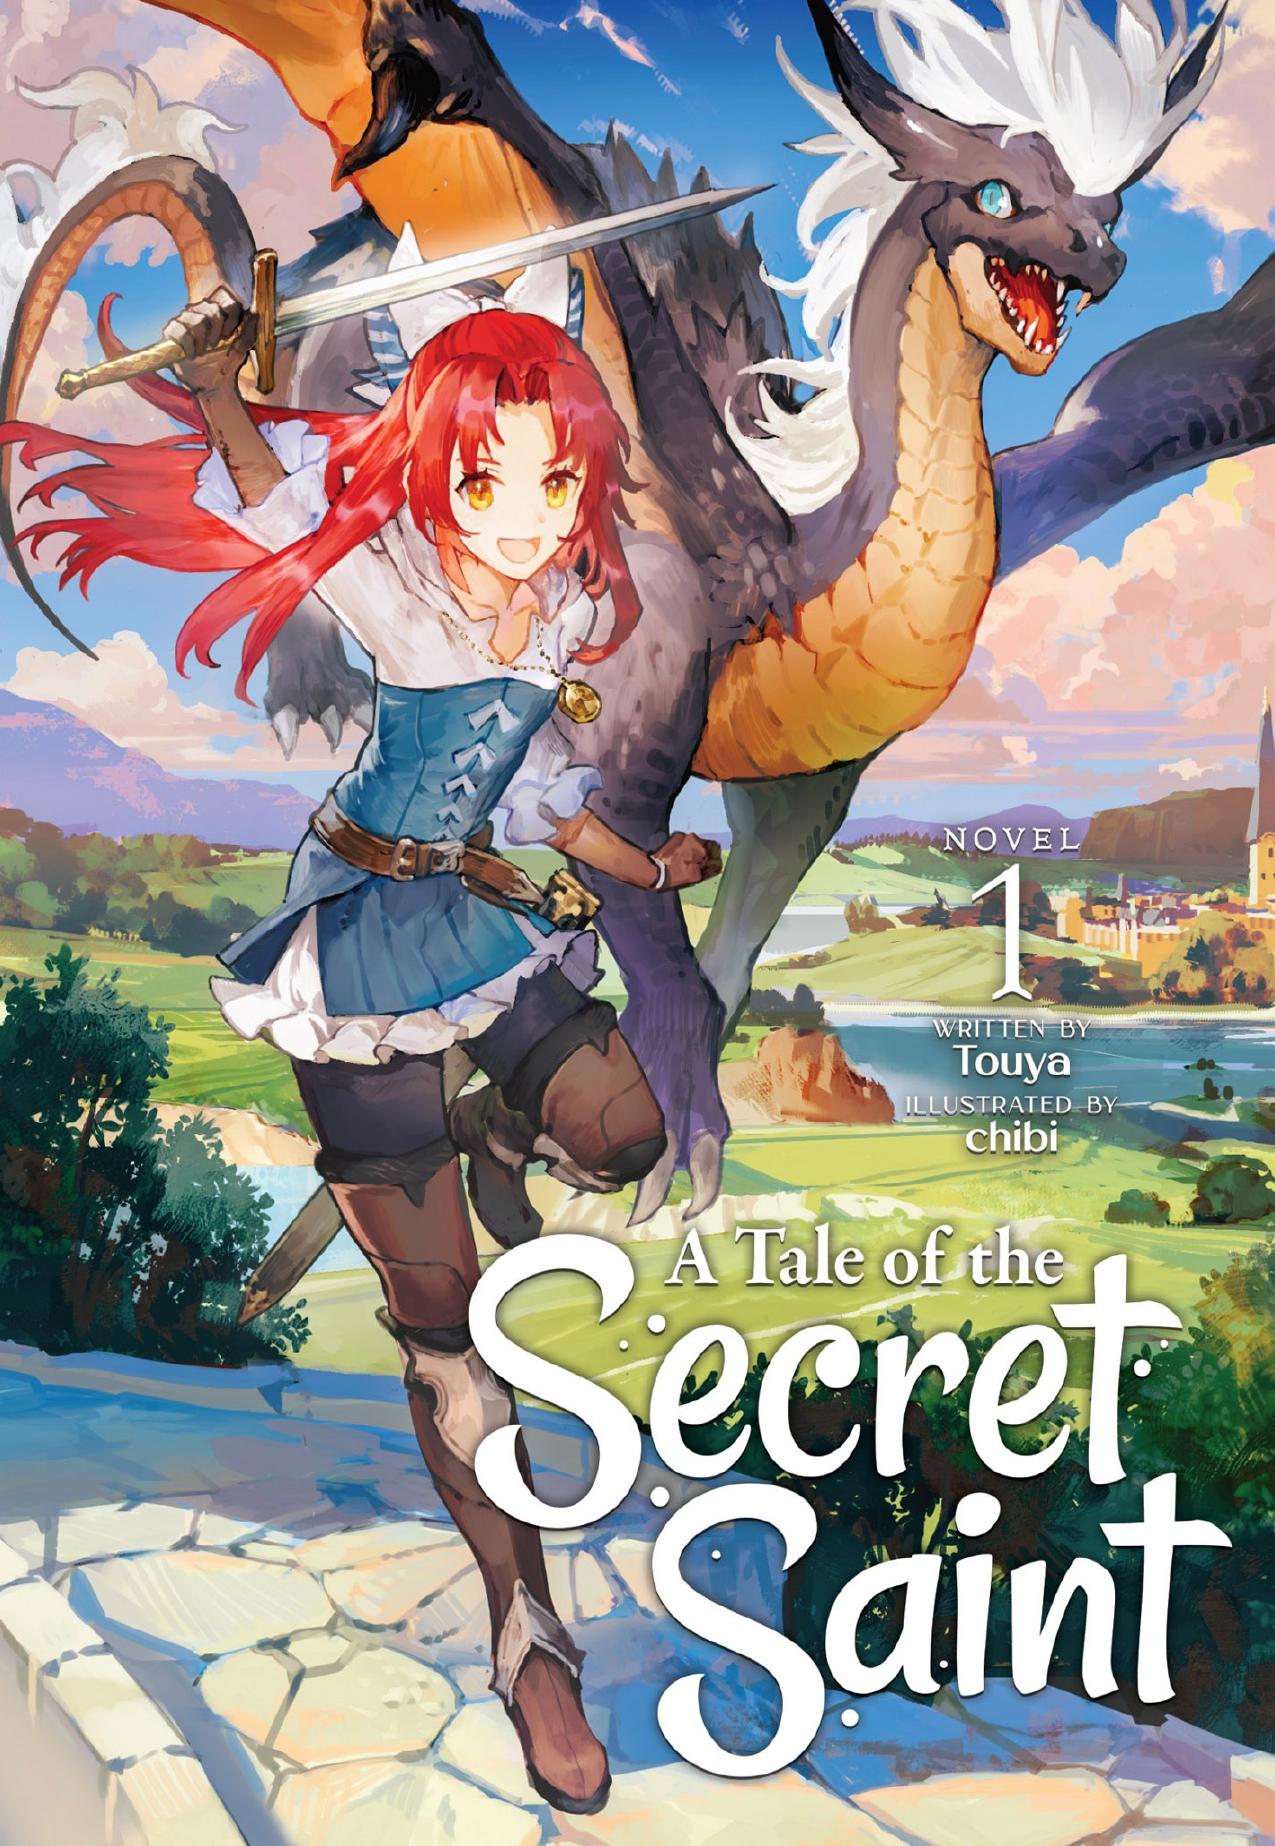 A Tale of the Secret Saint Vol. 1 by Touya